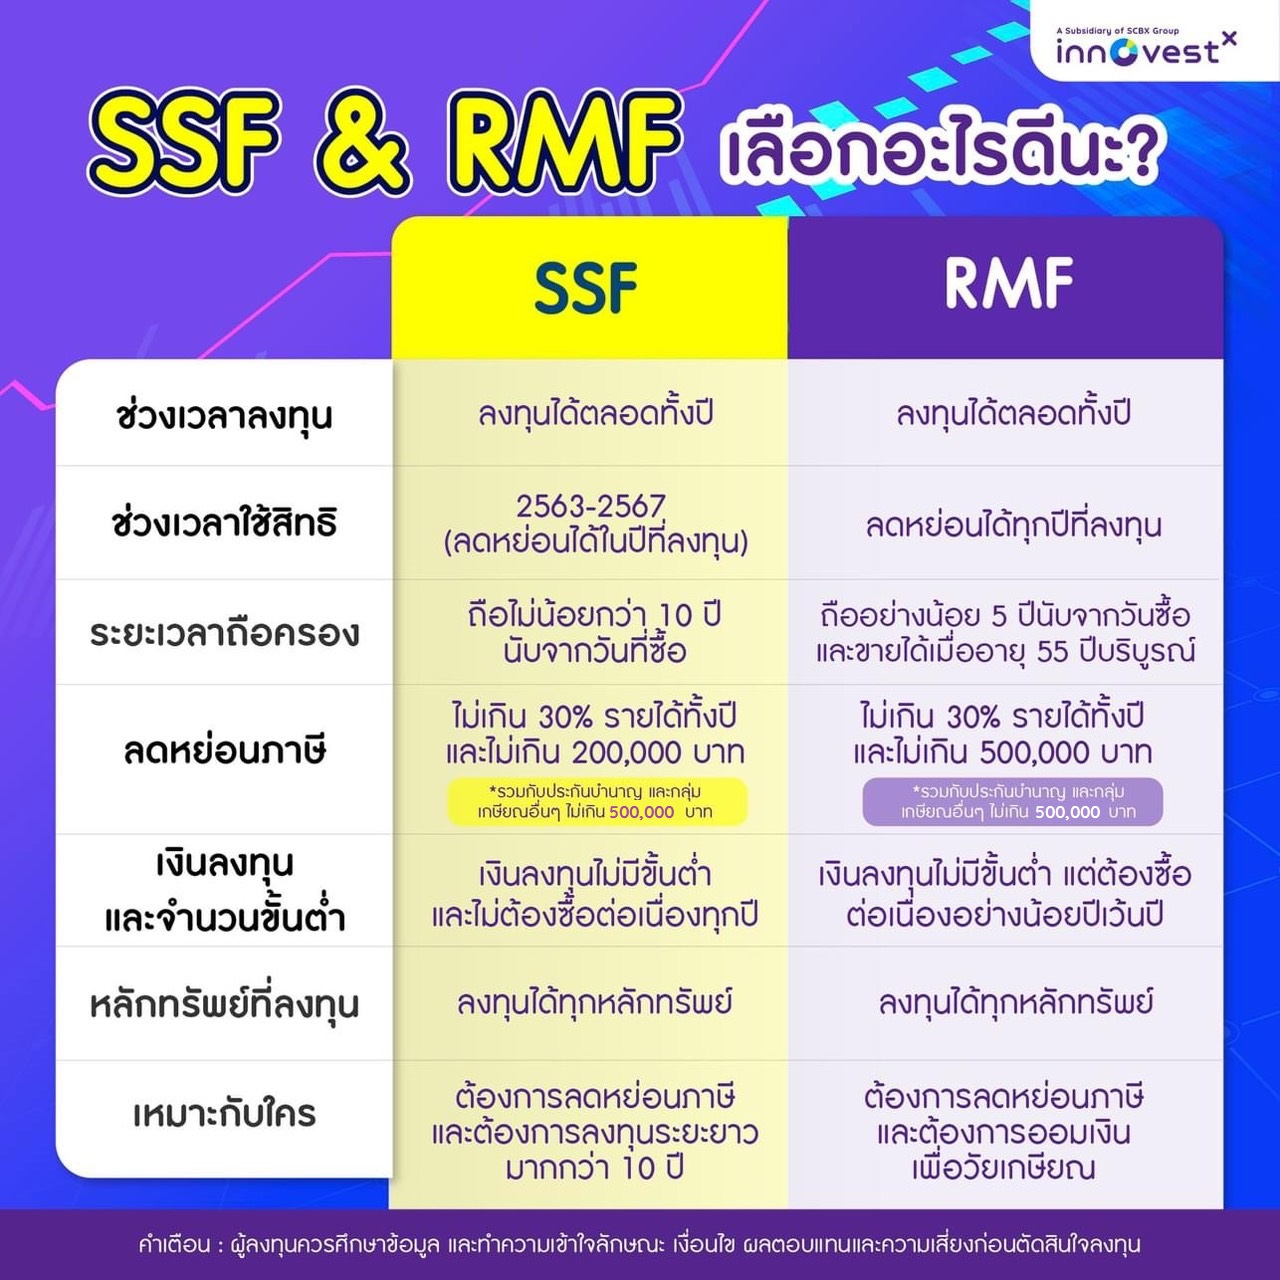 ssf rmf ต่างกันอย่างไร